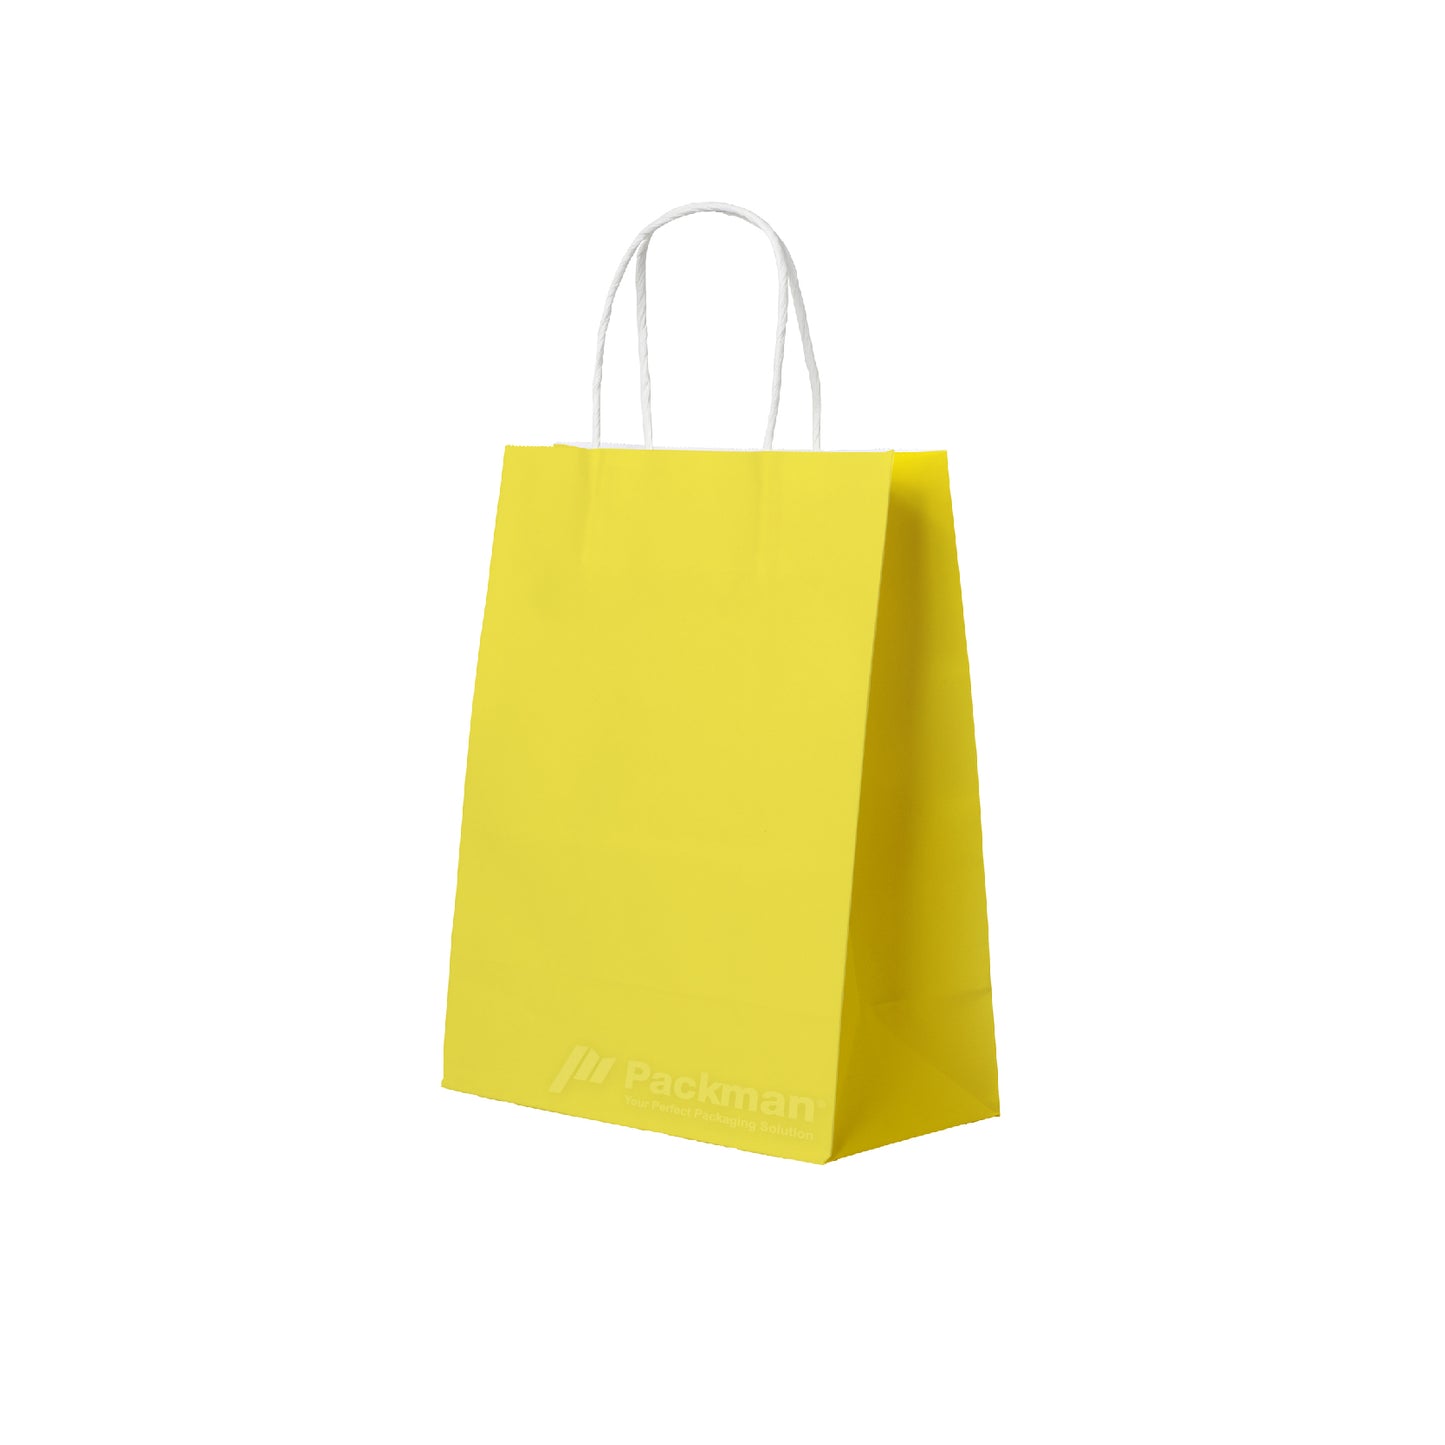 21 x 11 x 27cm Yellow Paper Bag (100pcs)